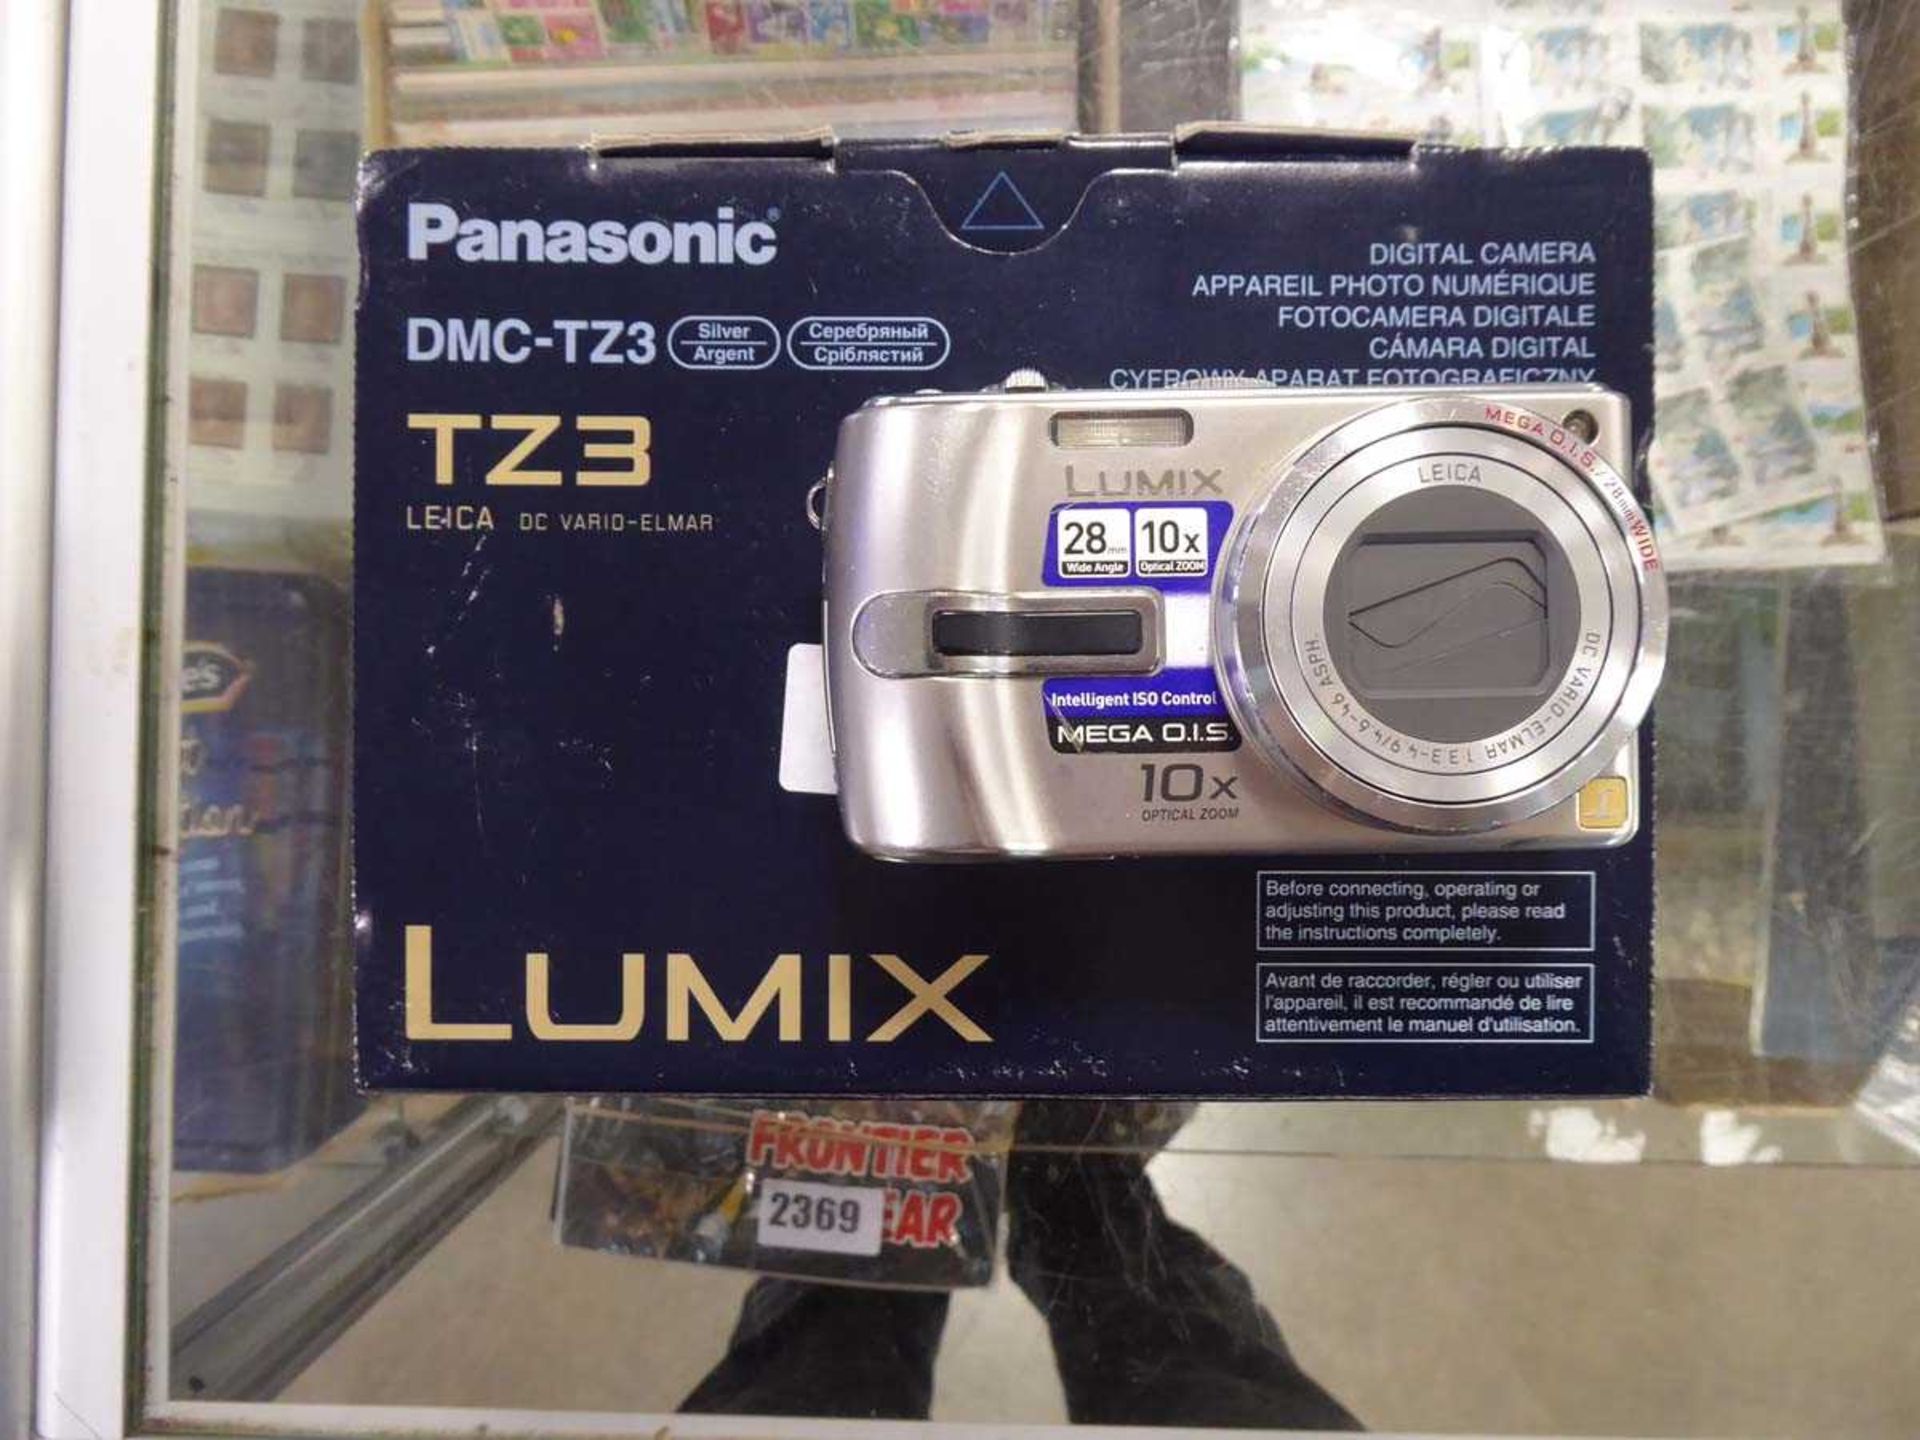 Panasonic TZ3 digital camera with box and battery